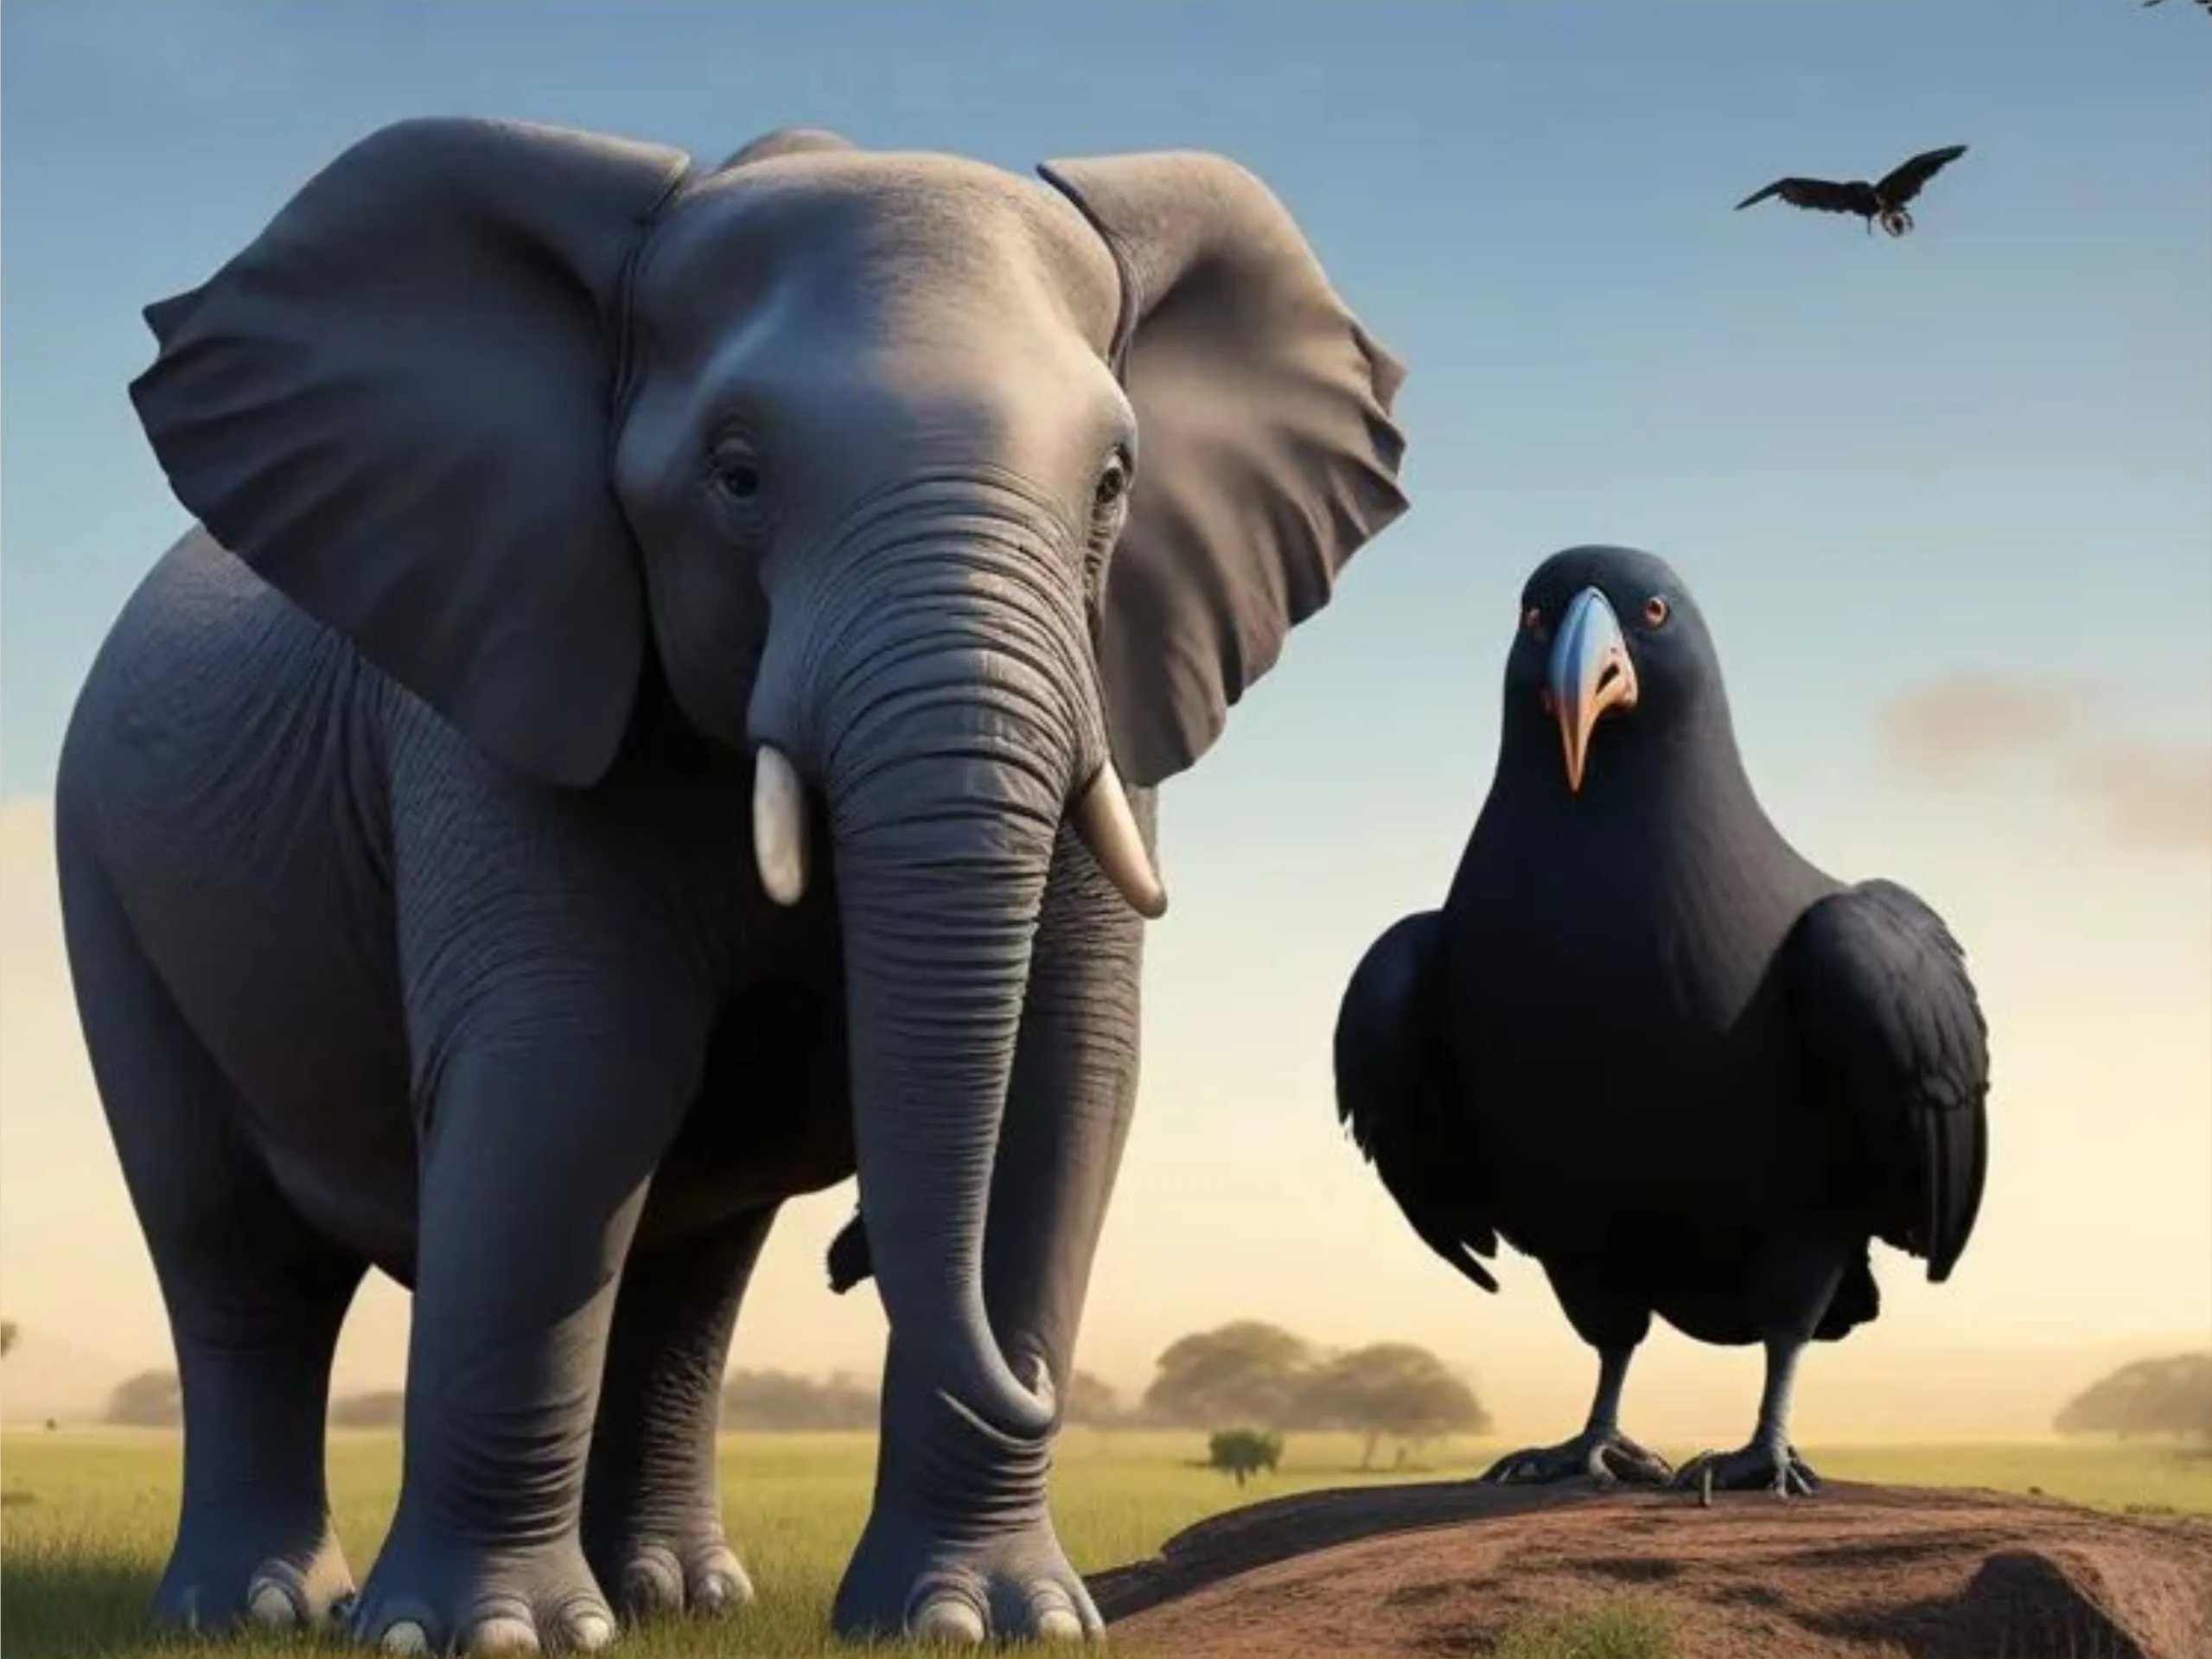 Elephant with Cuckoo cartoon image